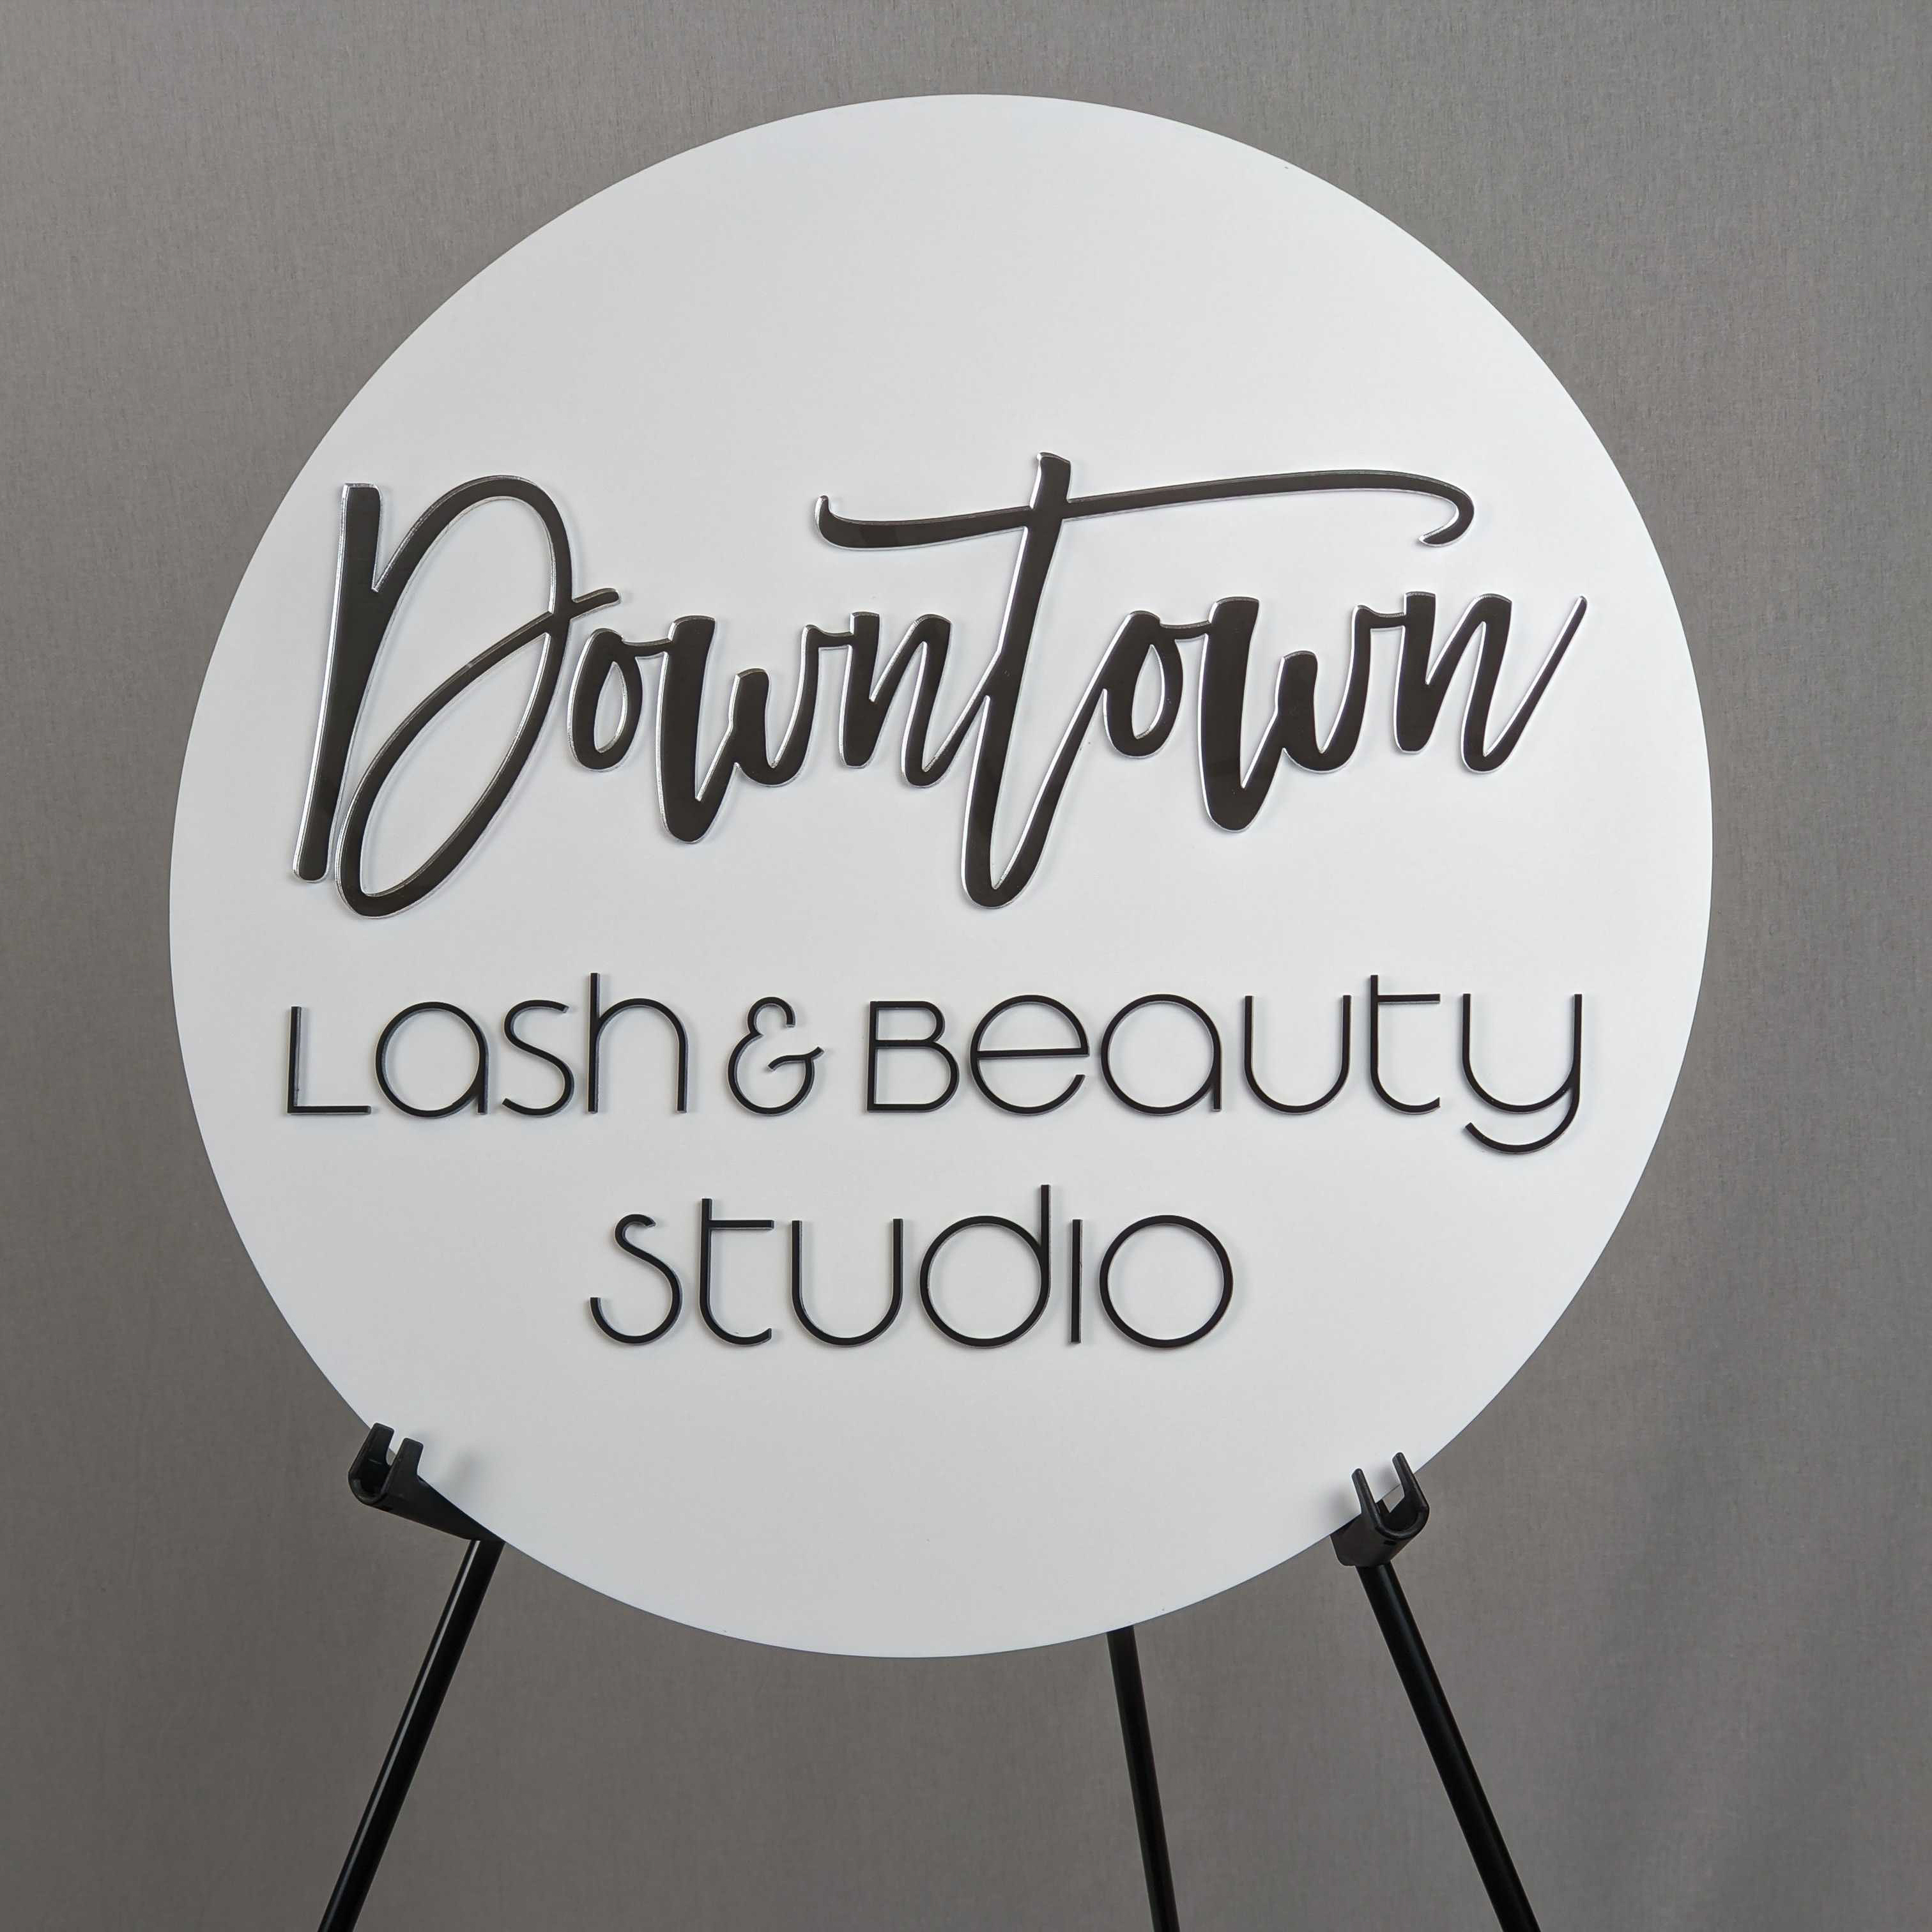 Downtown Lash & Beauty Studio round sign